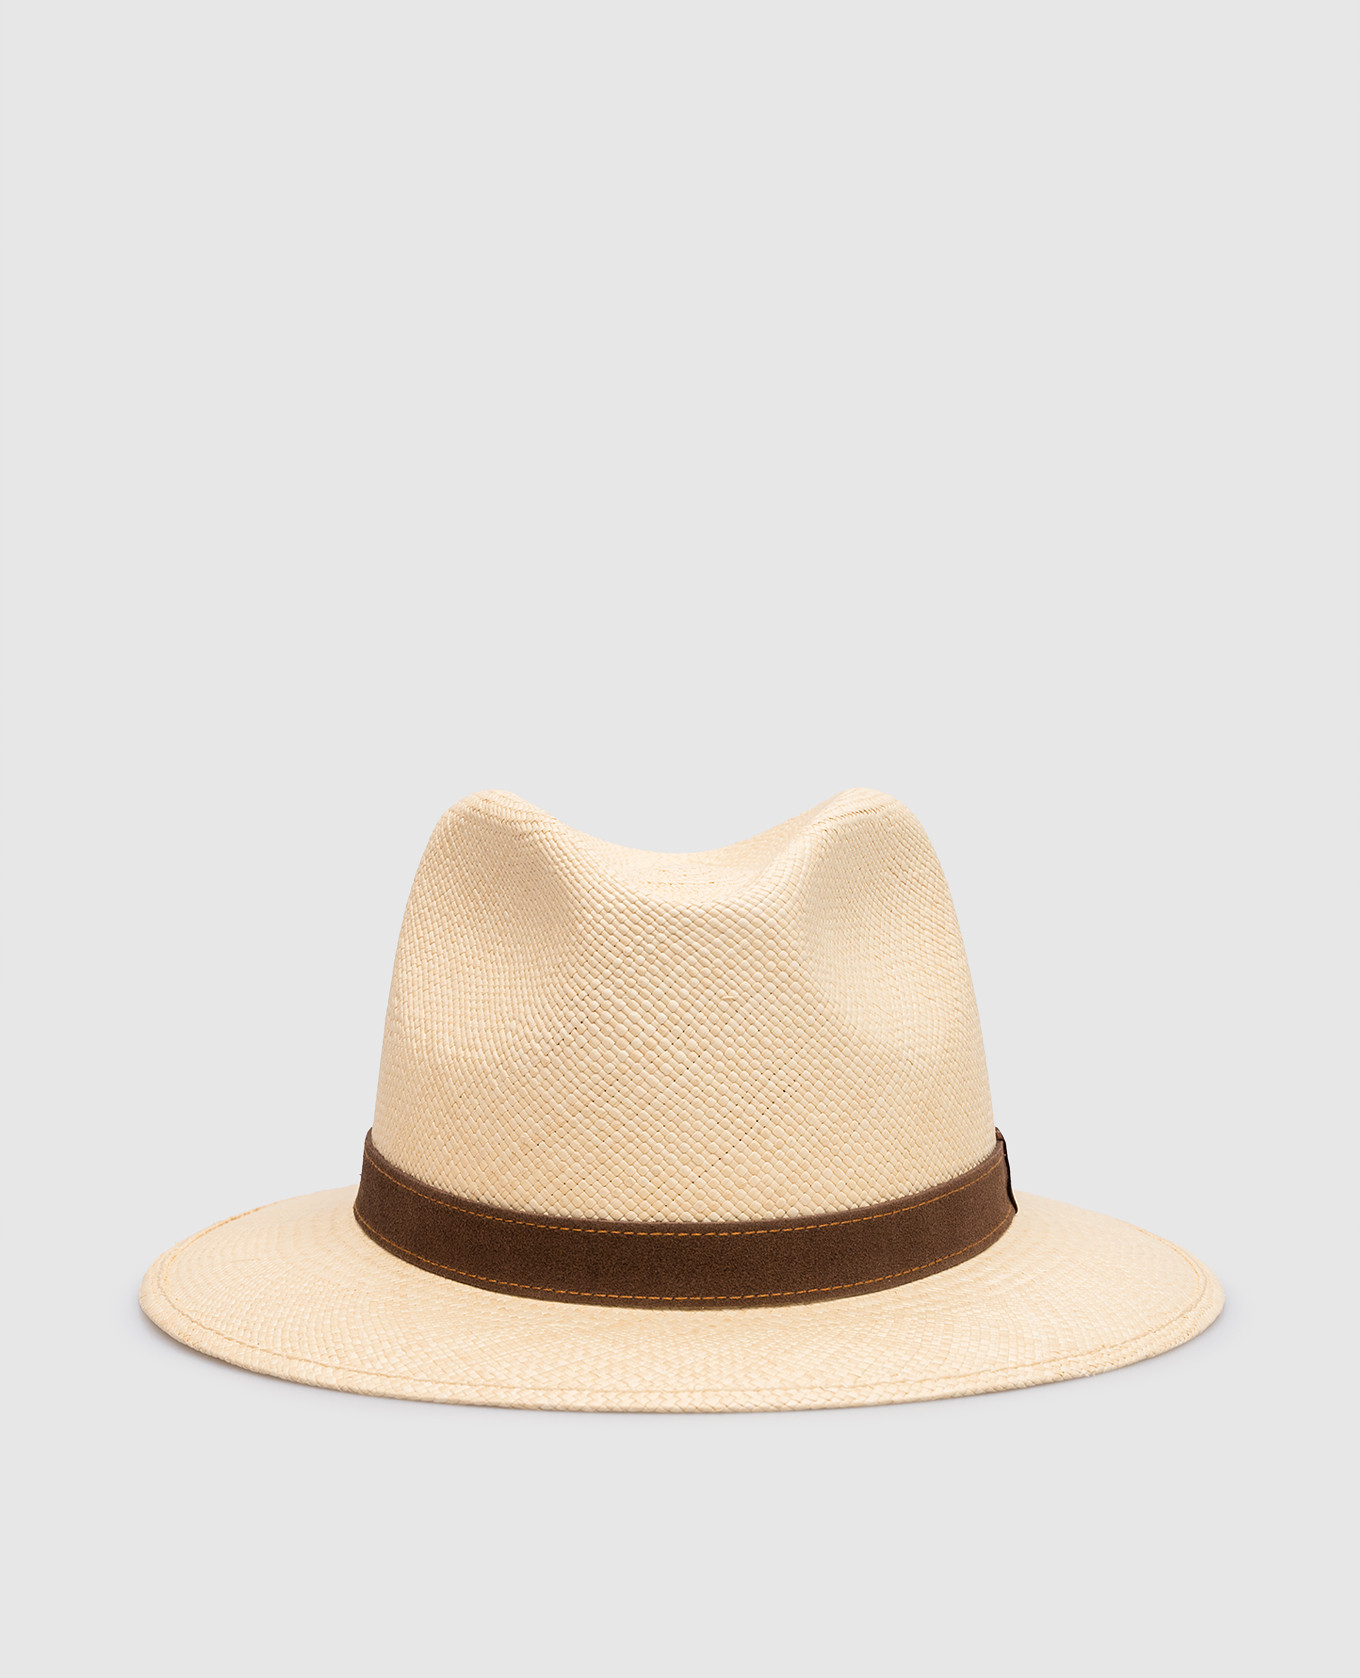 Country beige straw hat